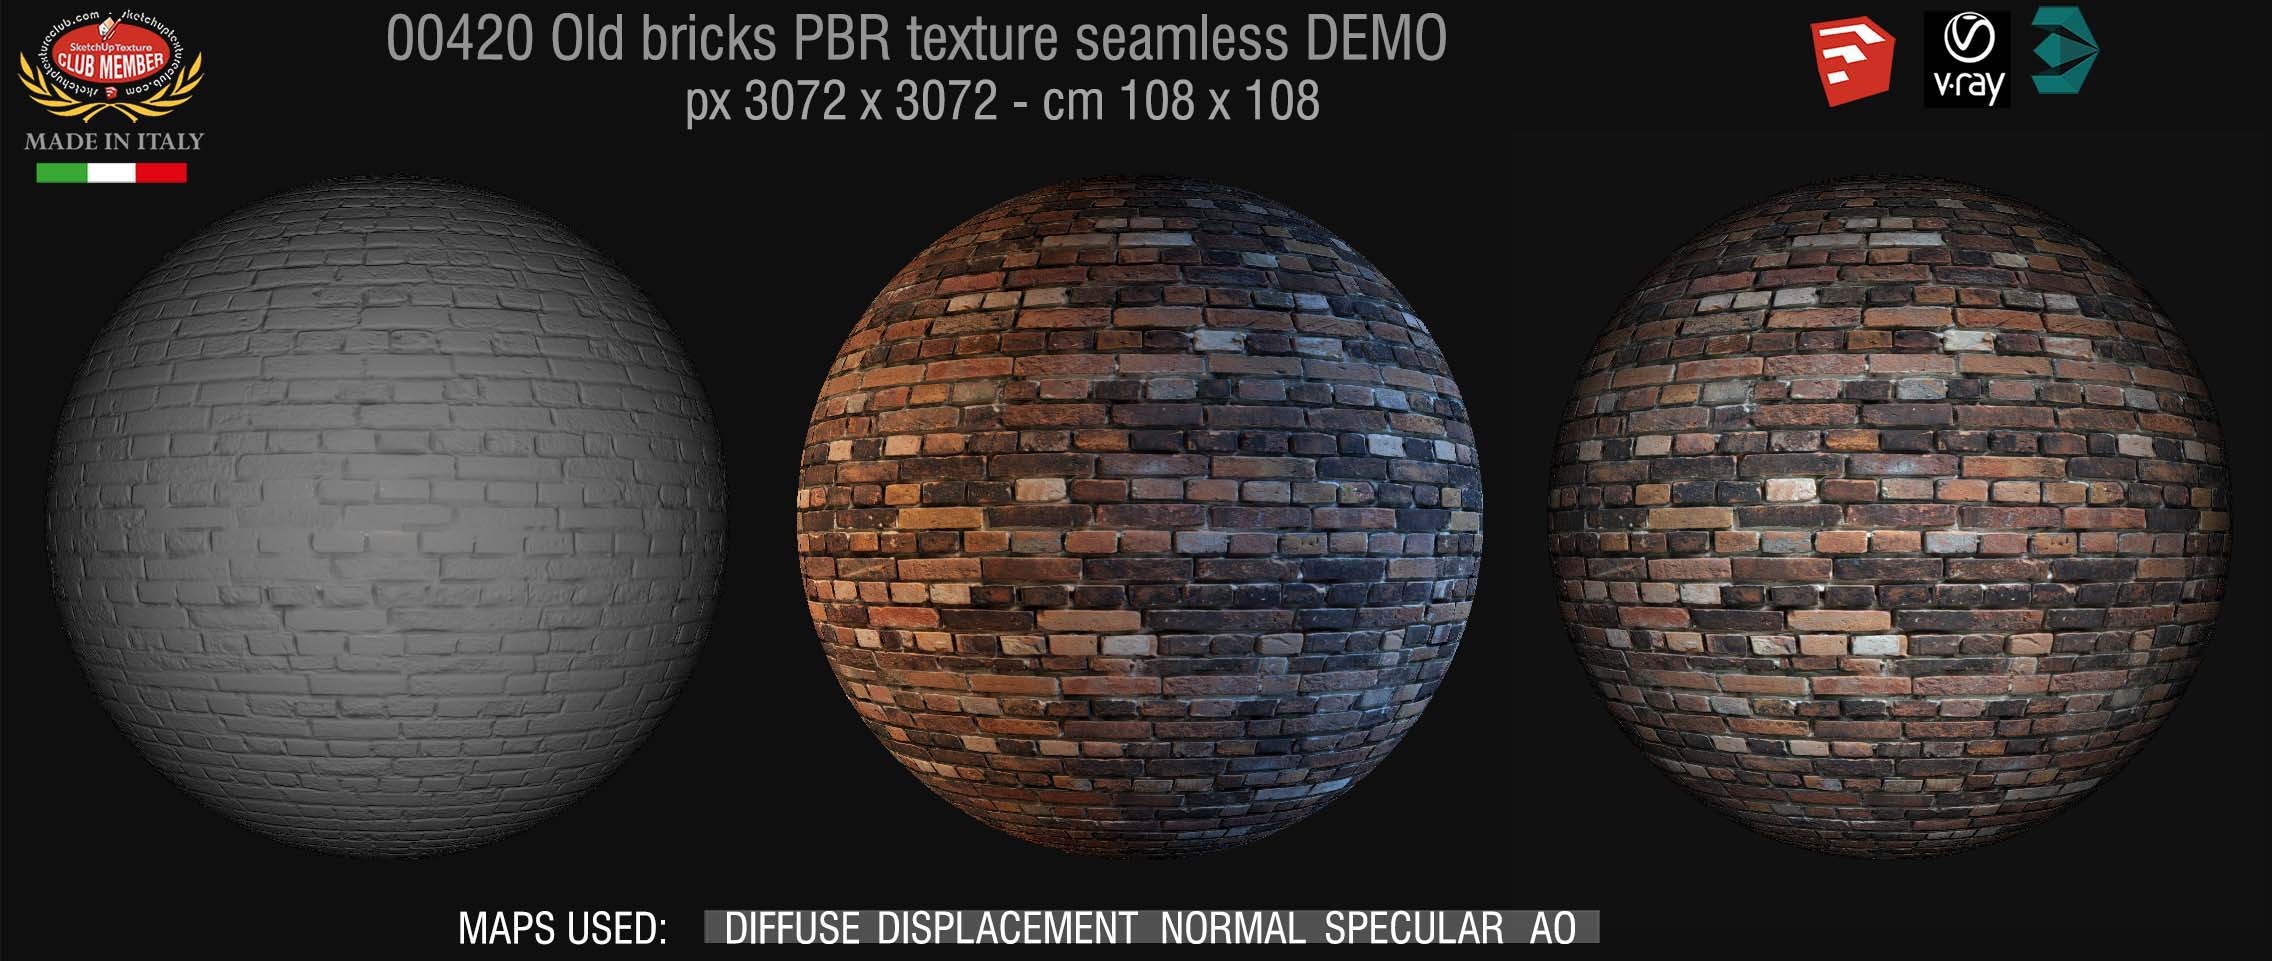 00420 Old bricks PBR texture seamless DEMO